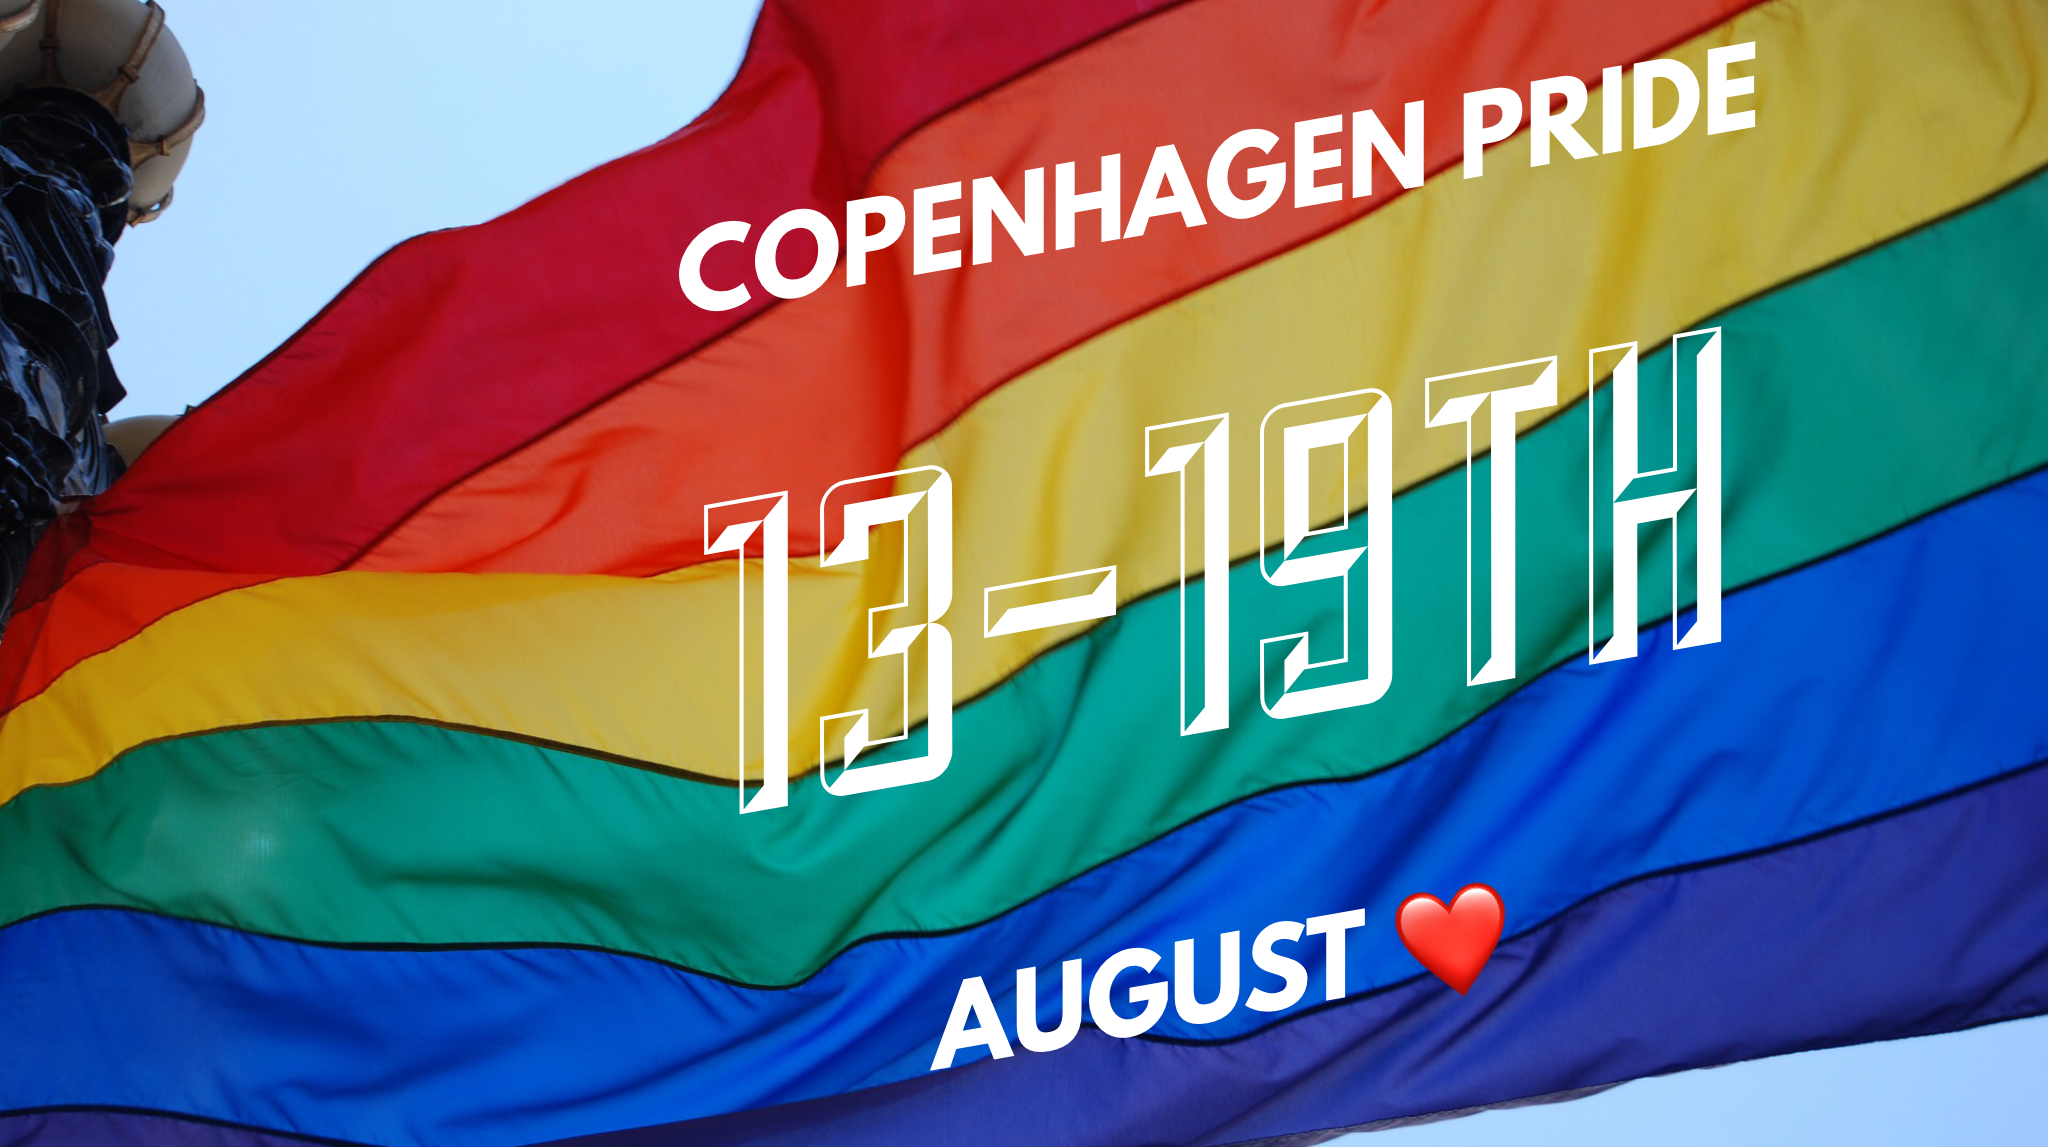 Copenhagen Pride Festival 2018